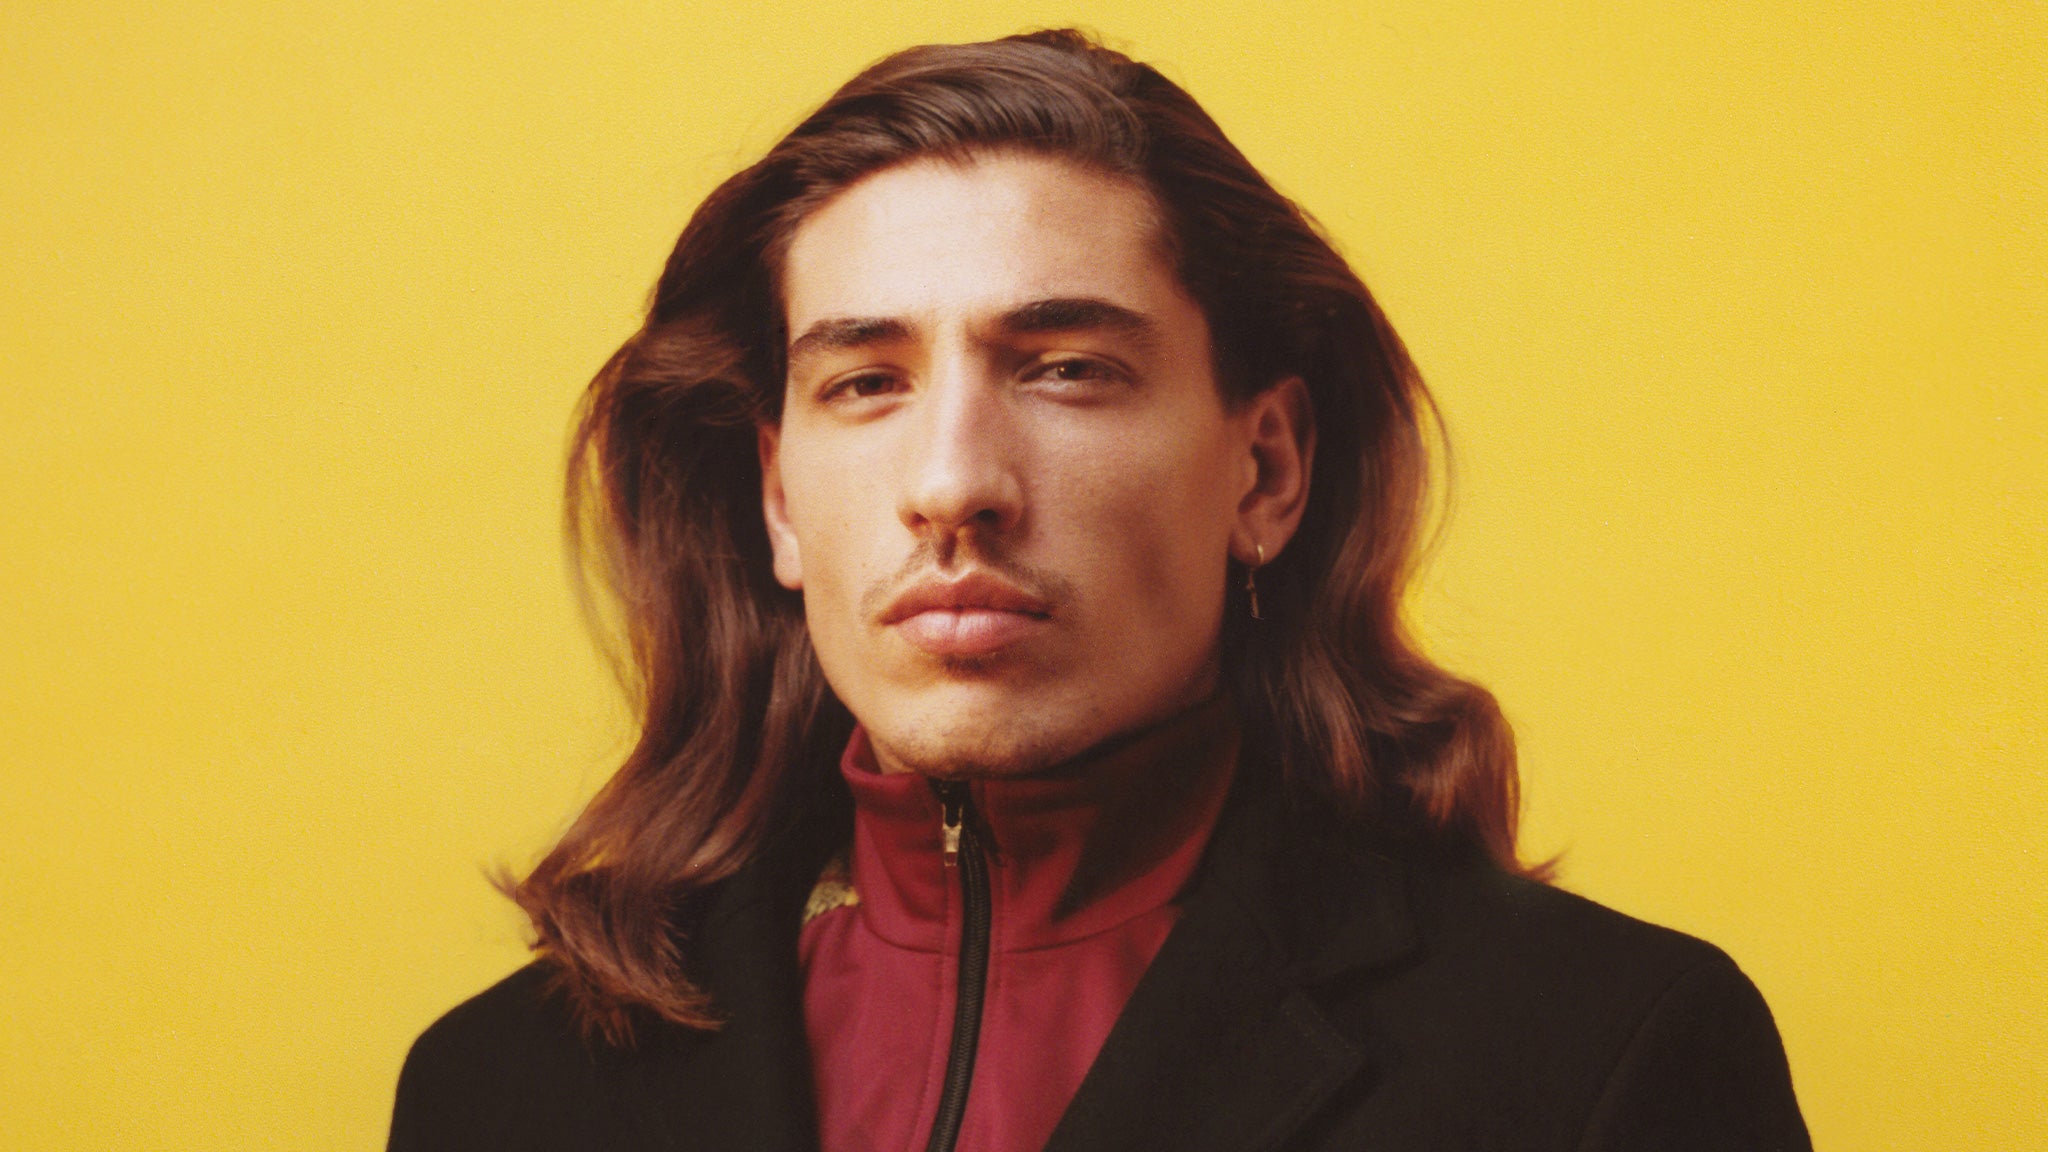 Hector Bellerin - Long hair, don't care